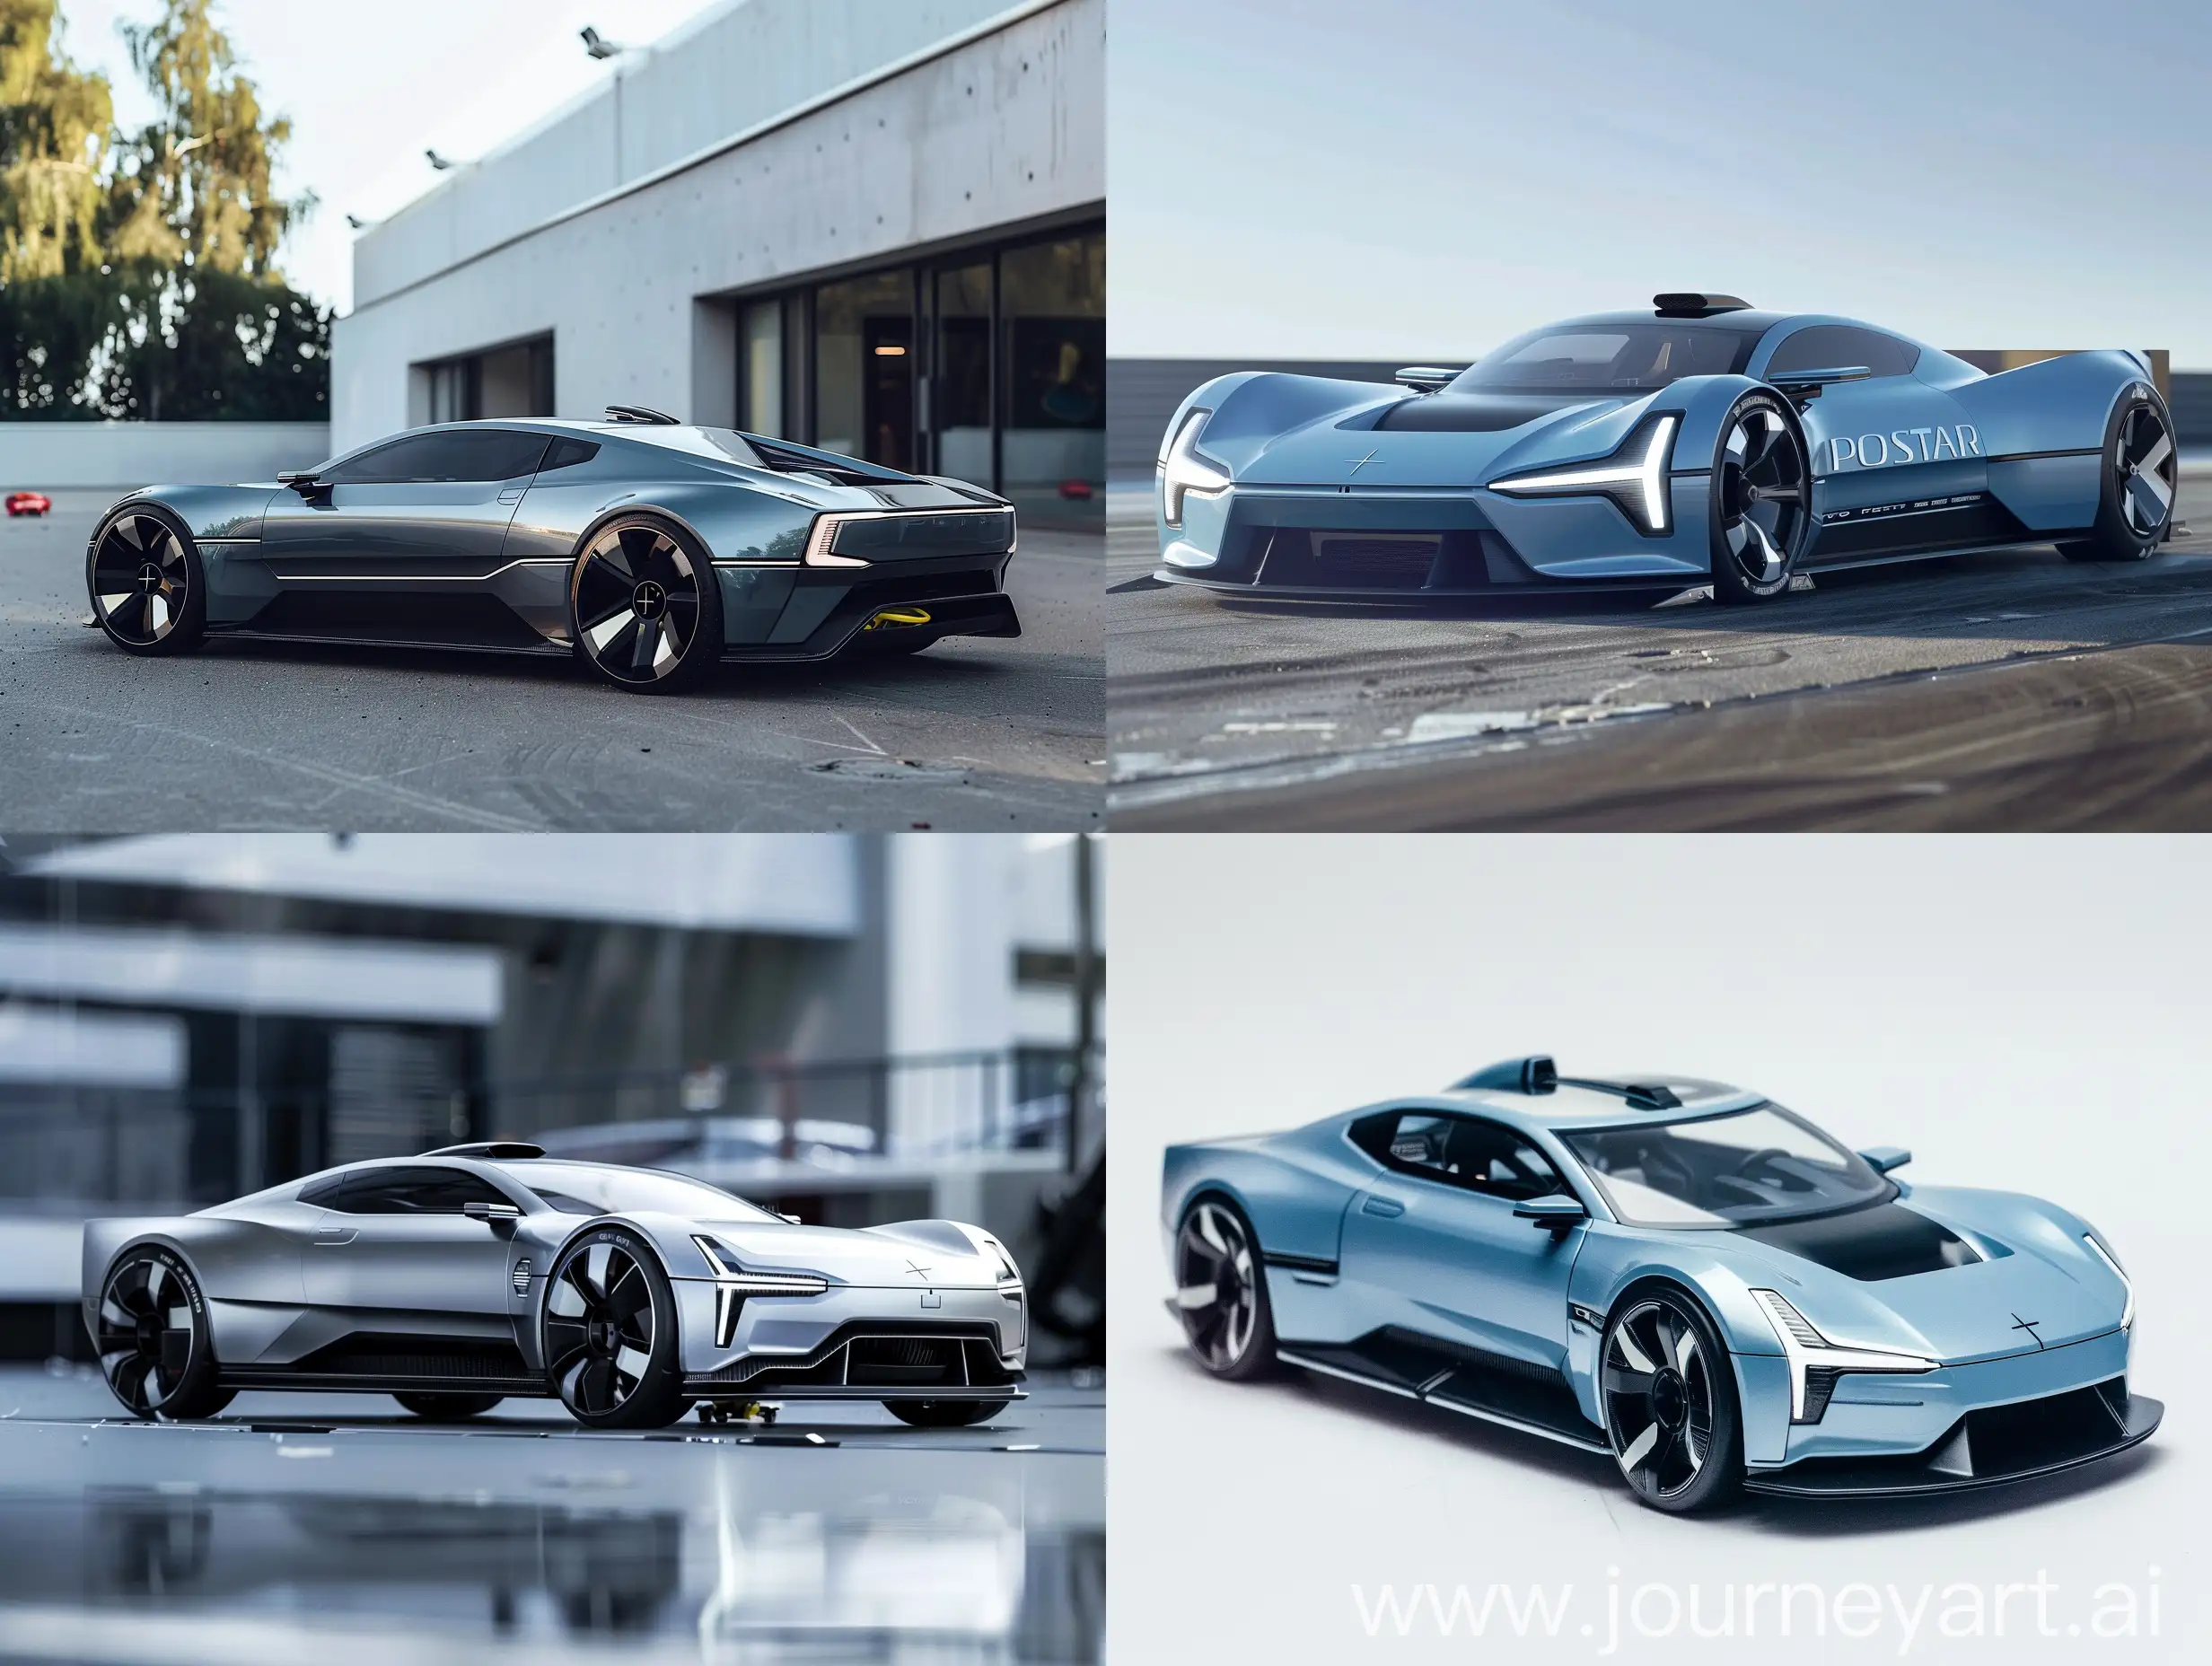 Futuristic-Hyper-Car-Design-Collaboration-Polestar-x-Hot-Wheels